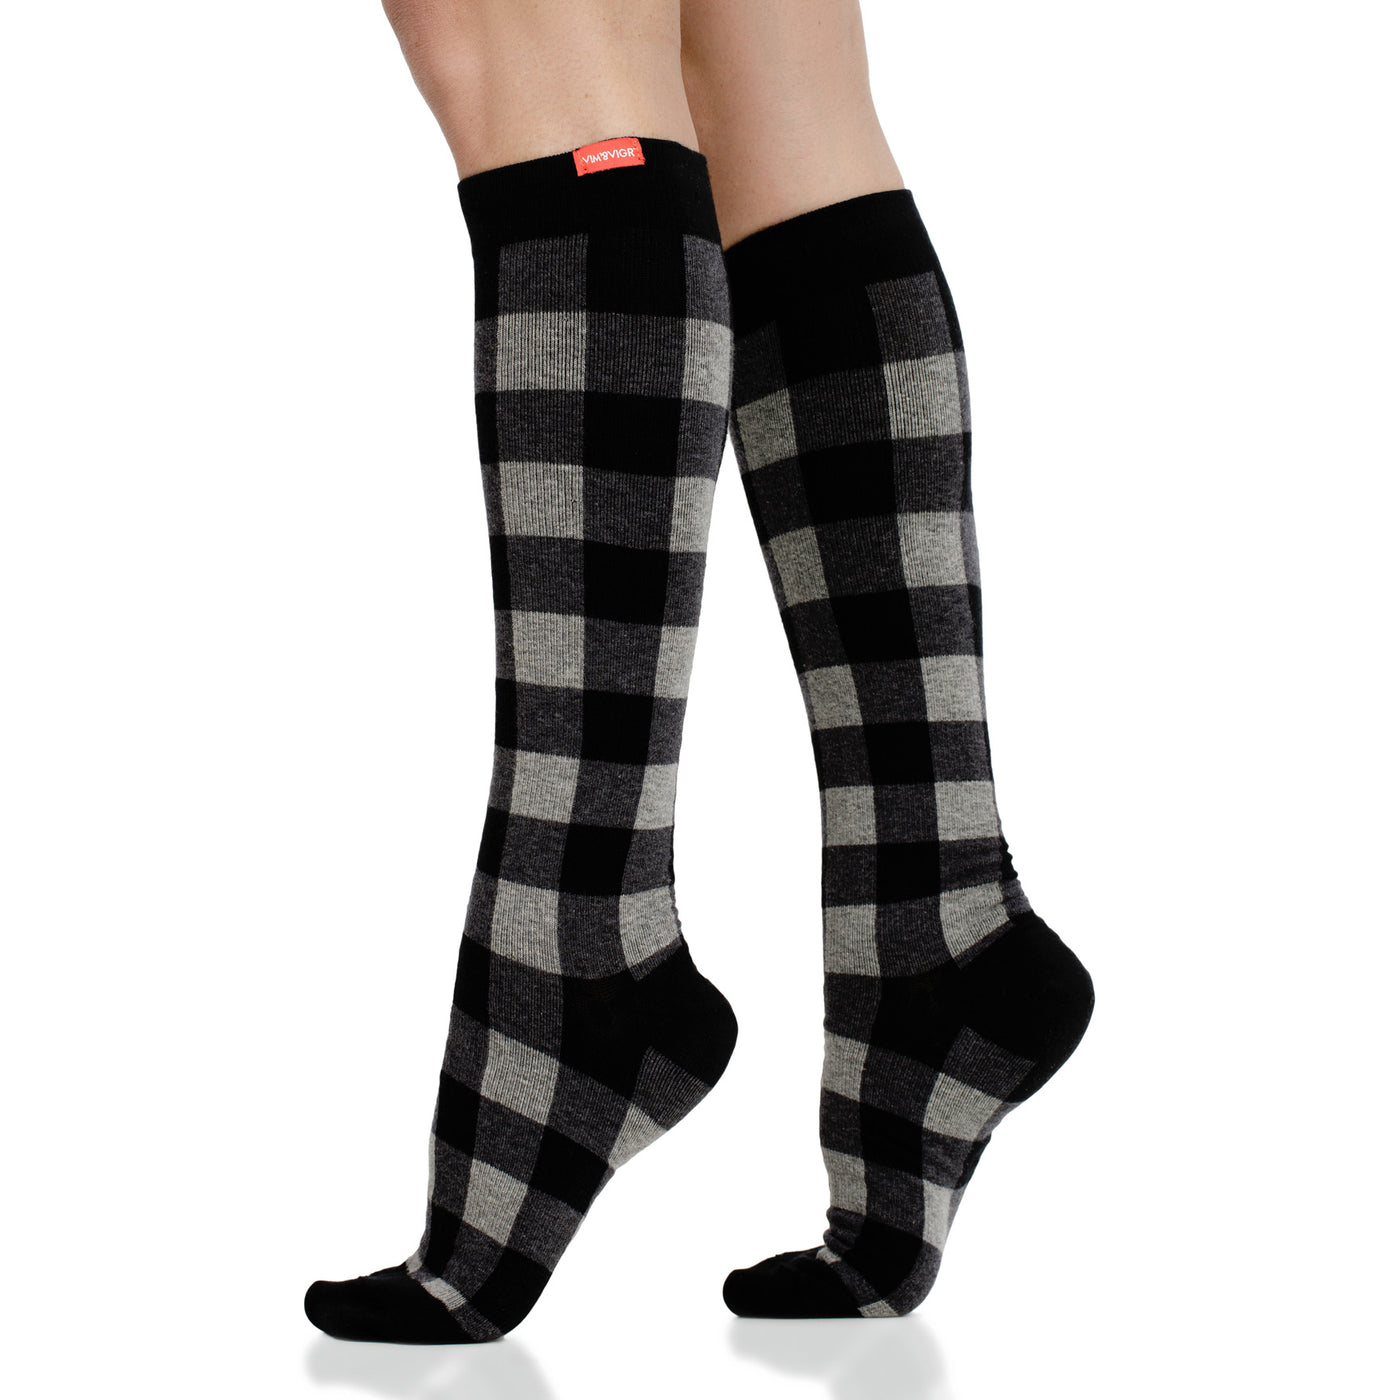 15-20 mmHg: Montana Plaid Heathered Grey square (Cotton) Compression Sock for Men & Women